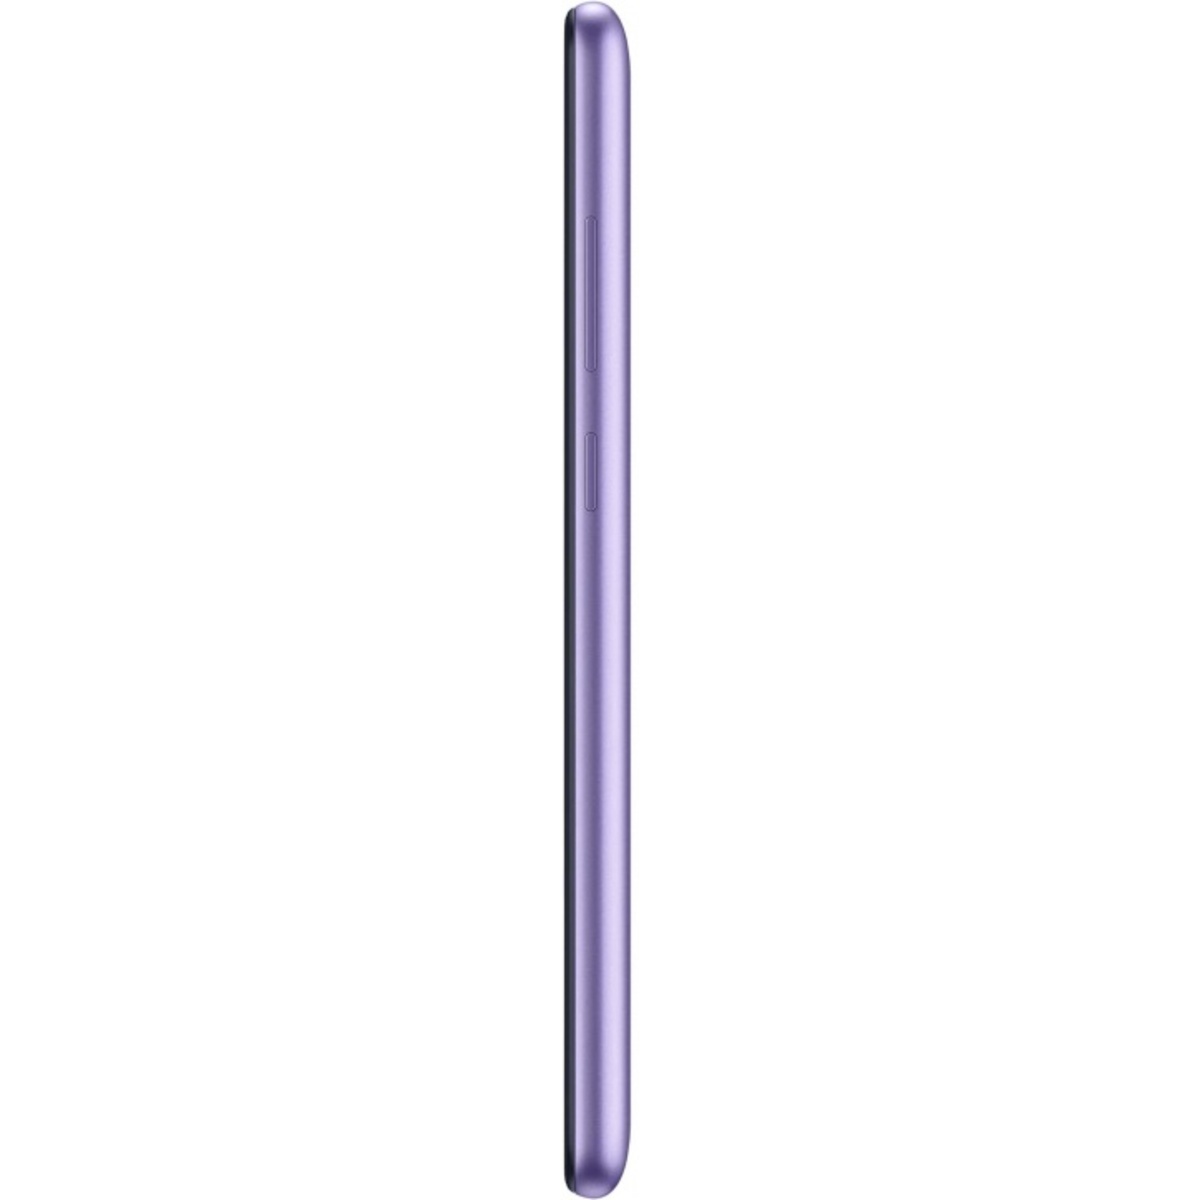 Смартфон Samsung Galaxy M11 SM-M115F/DSN 3/32Gb (NFC) (Цвет: Violet)